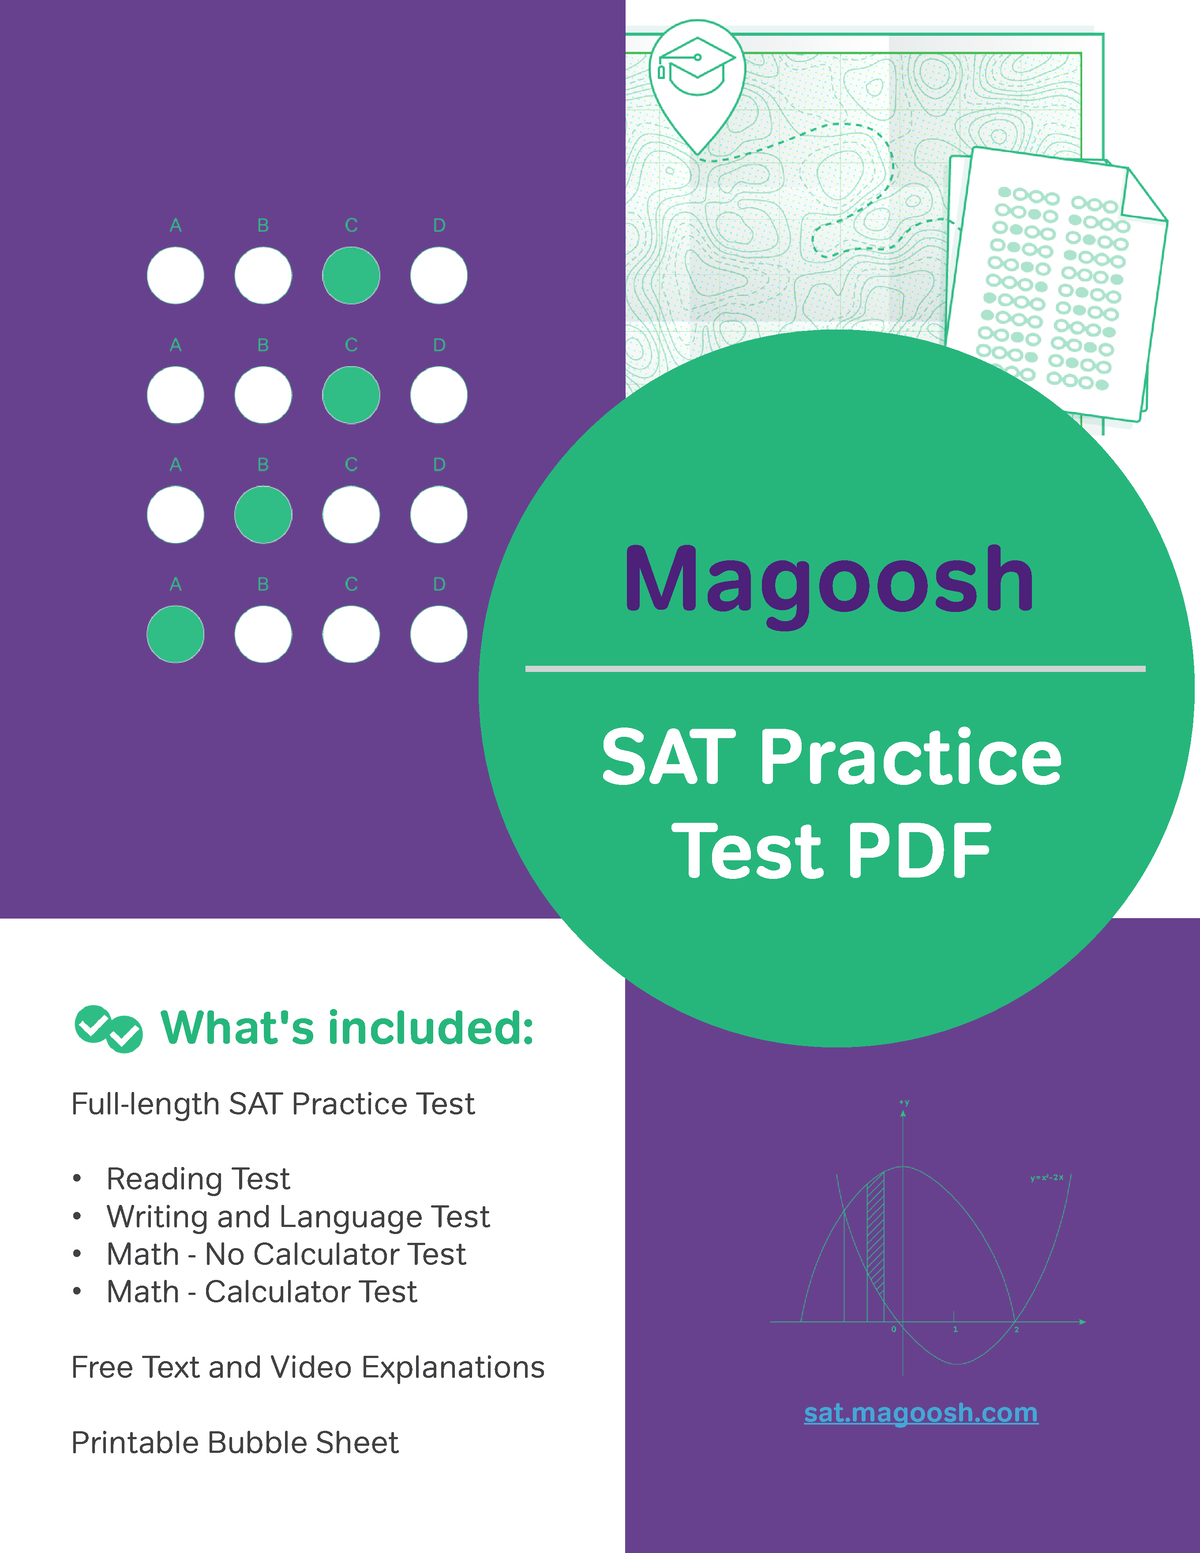 sat-practice-test-pdf-idk-2-sat-practice-test-pdf-magoosh-what-s